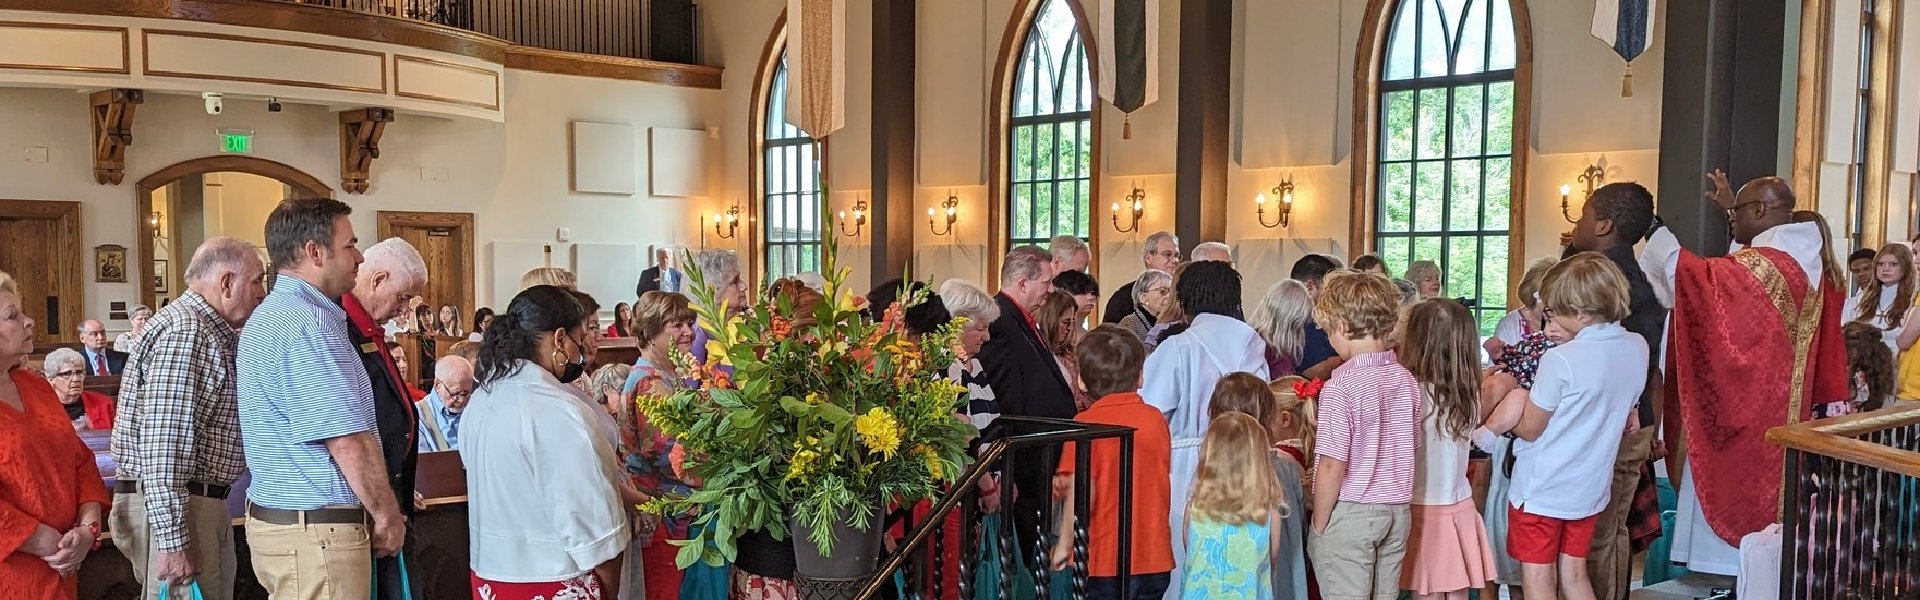 people gathering in church